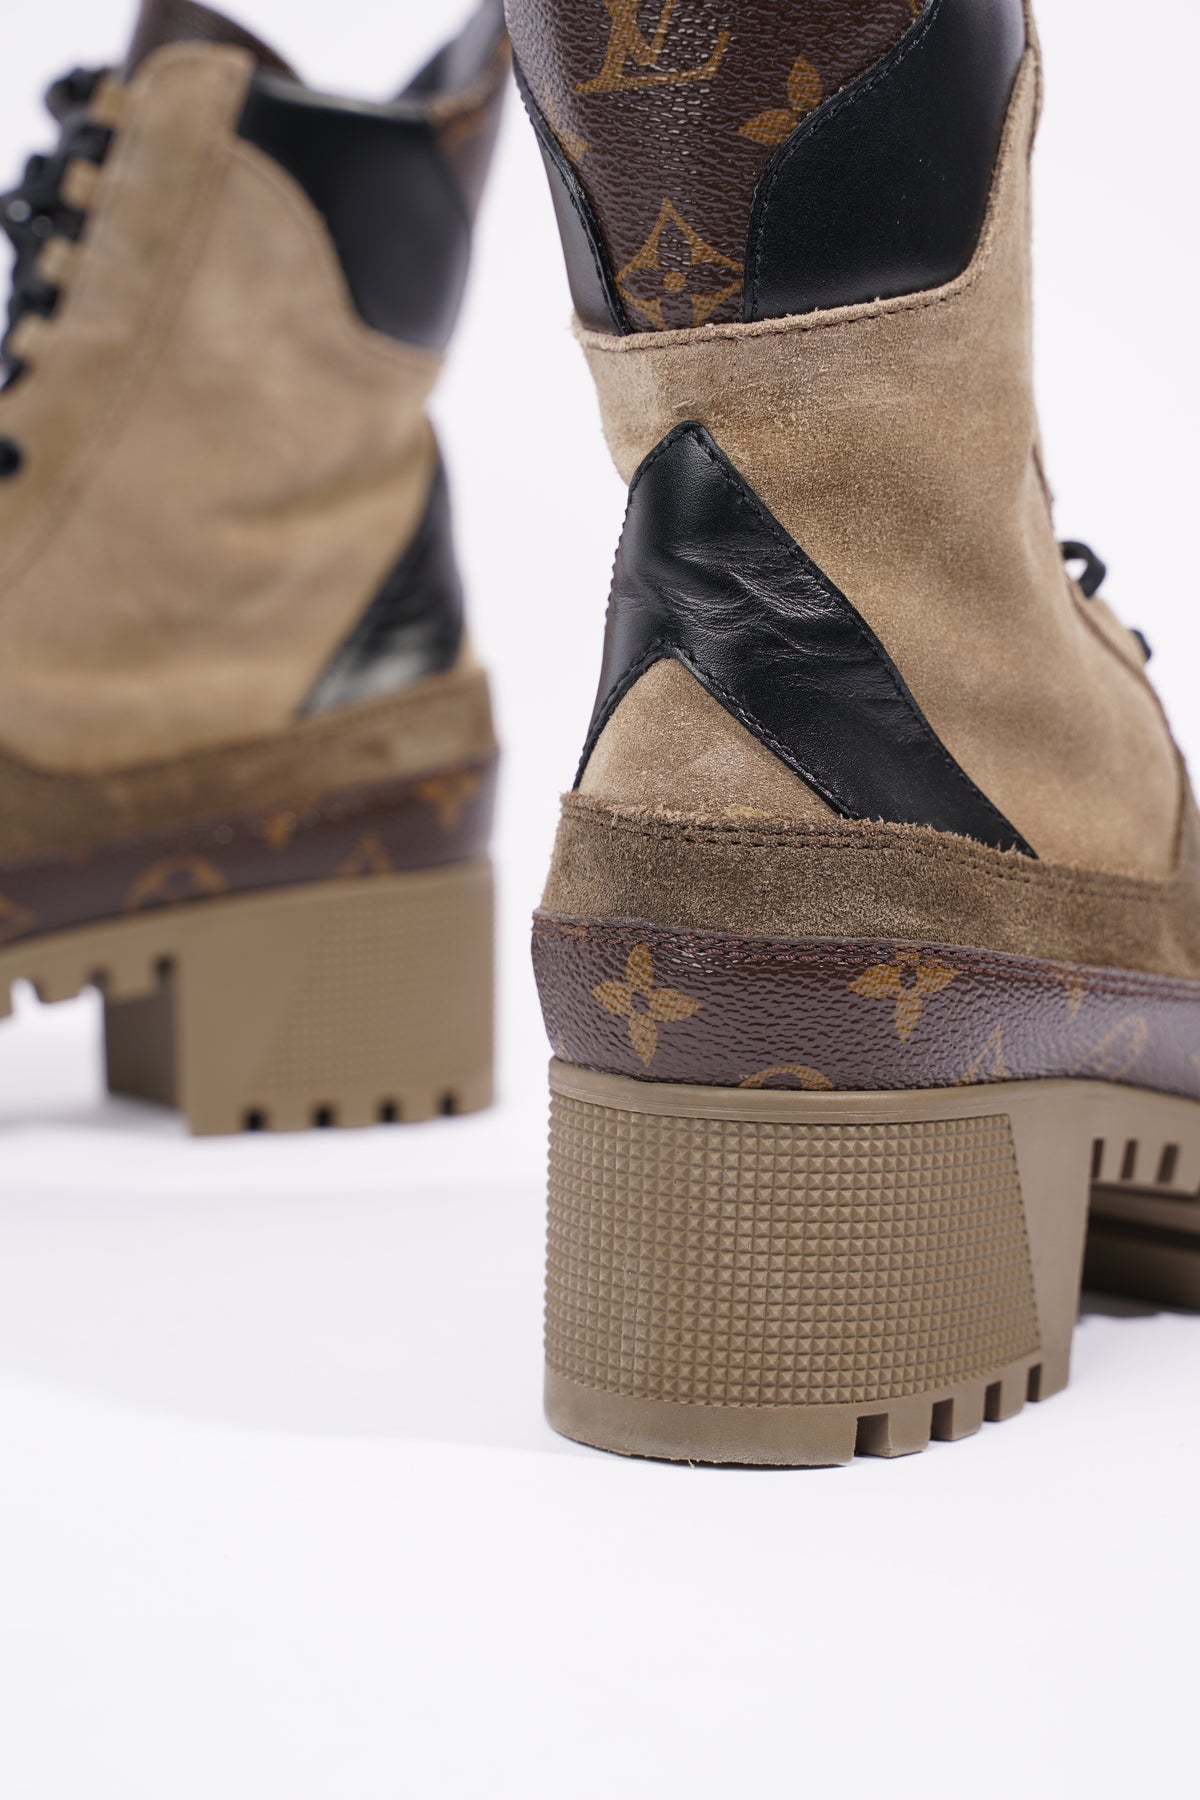 Lv Laureate Platform Desert Boots Show